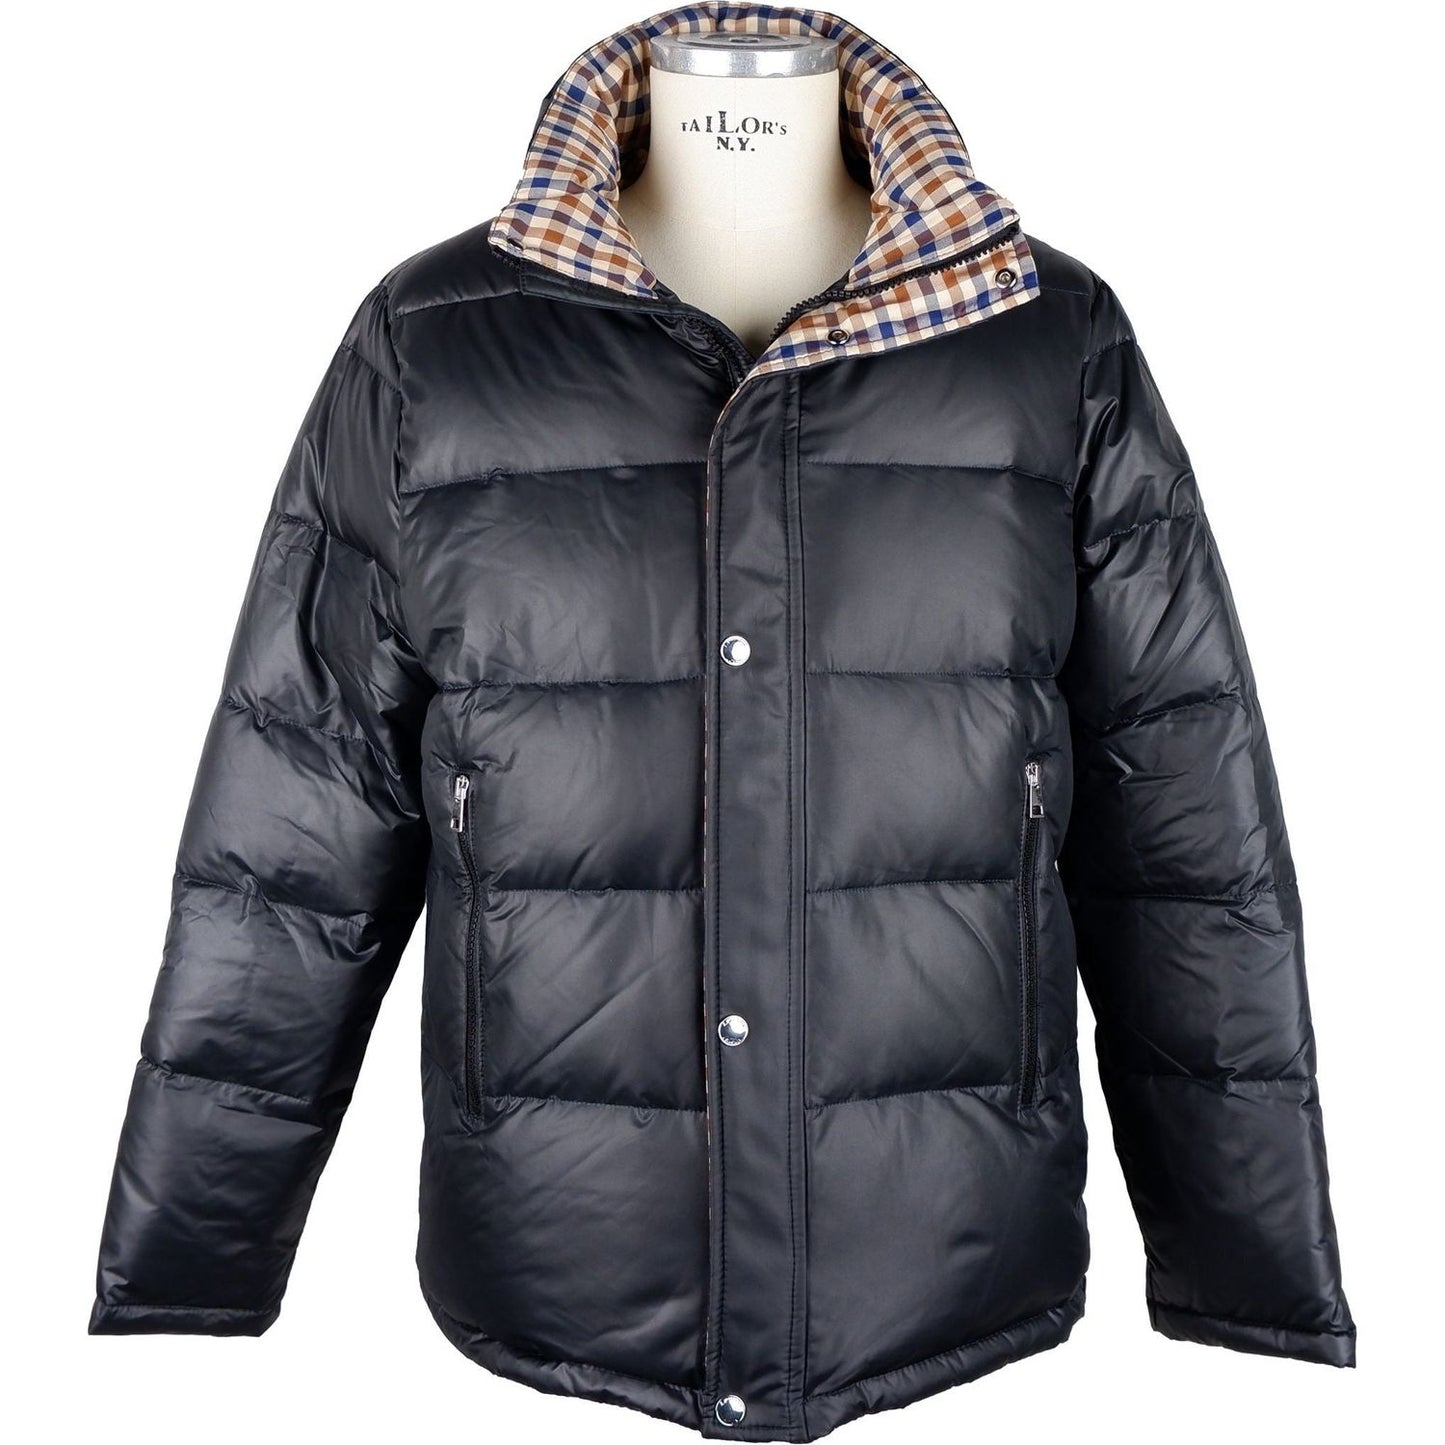 Aquascutum Elegant Black Padded Jacket with Removable Hood black-polyester-jacket-3 MAN COATS & JACKETS product-7381-762139221-scaled-5224a3d8-3c7.jpg